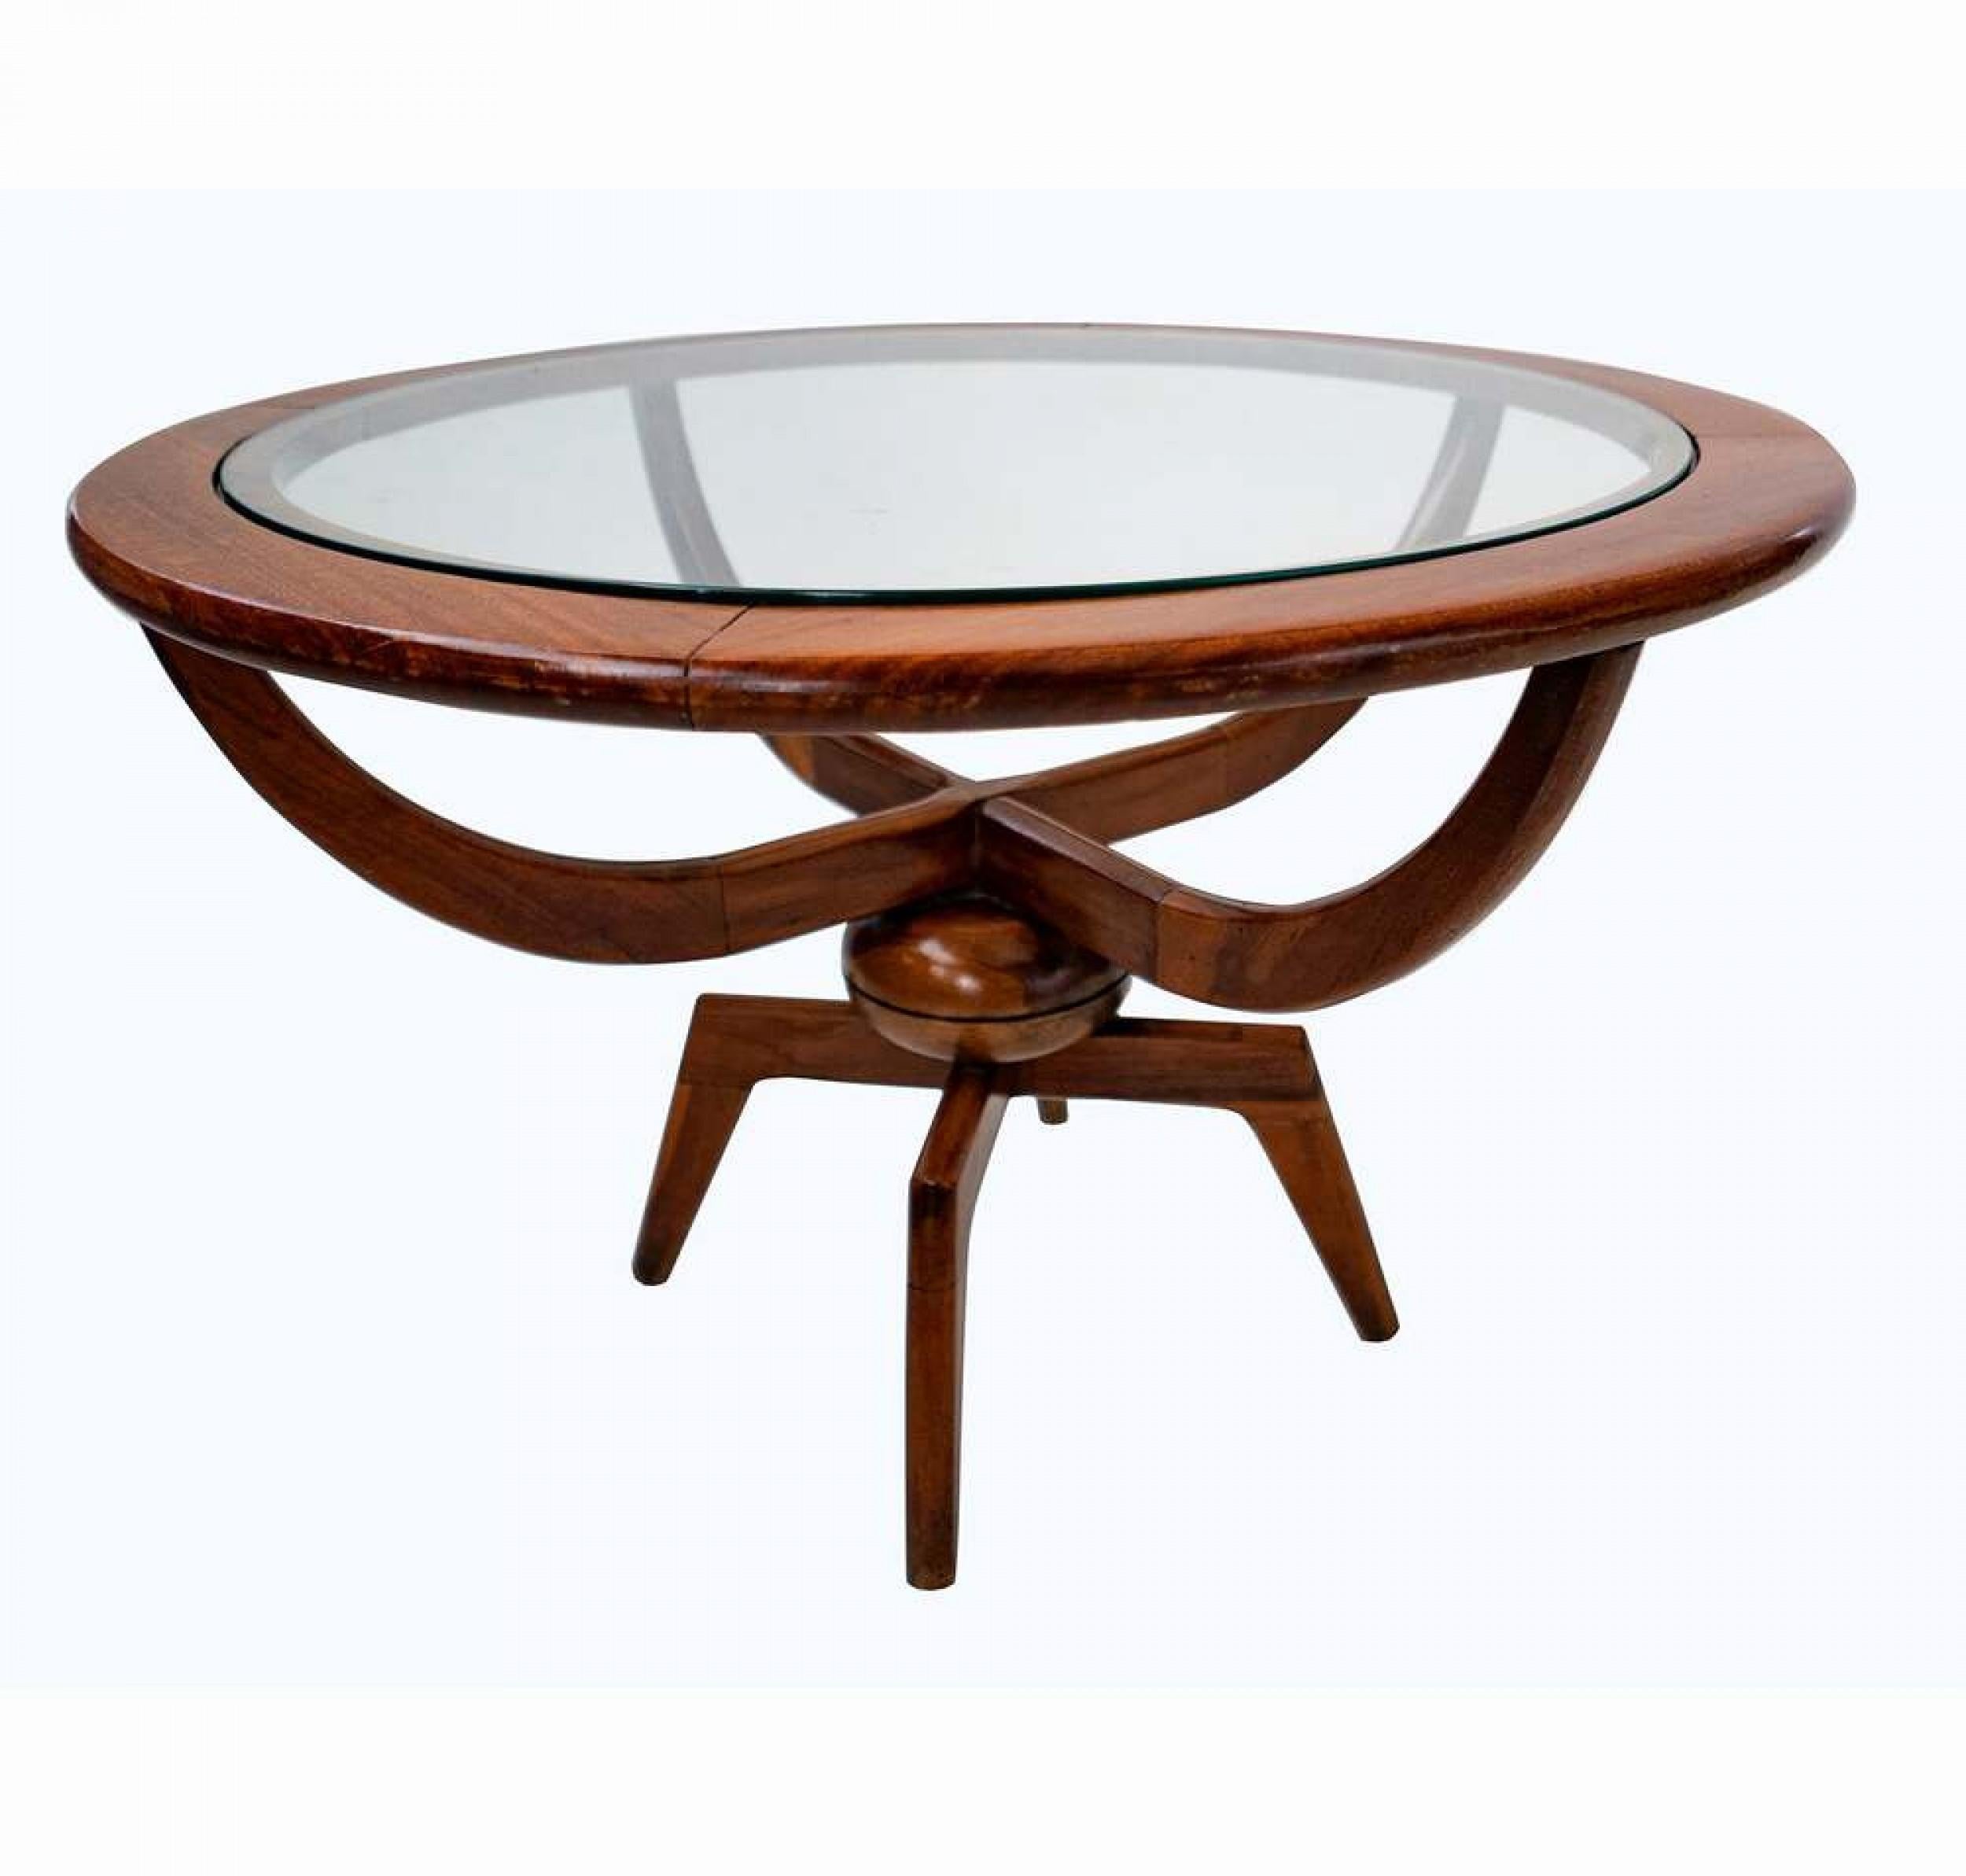 Midcentury American Modern circular wood and glass coffee table.